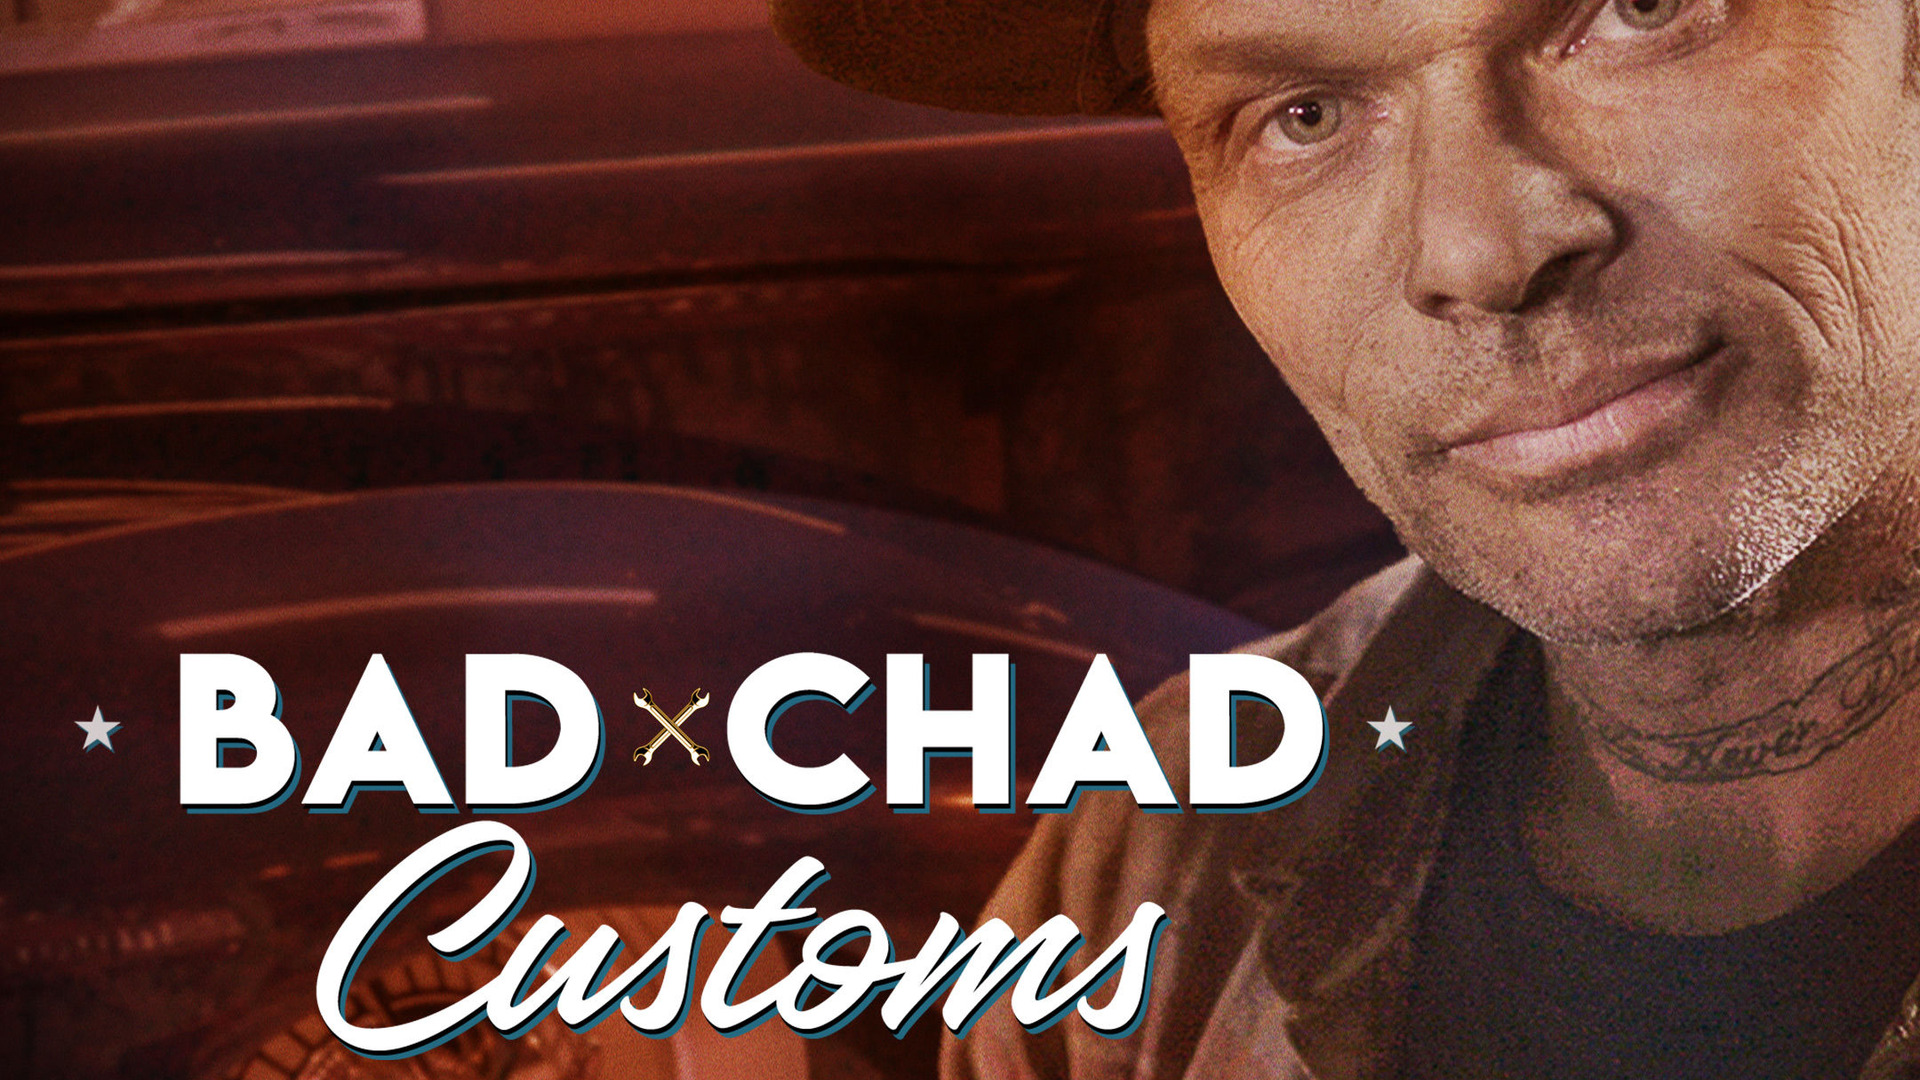 Show Bad Chad Customs